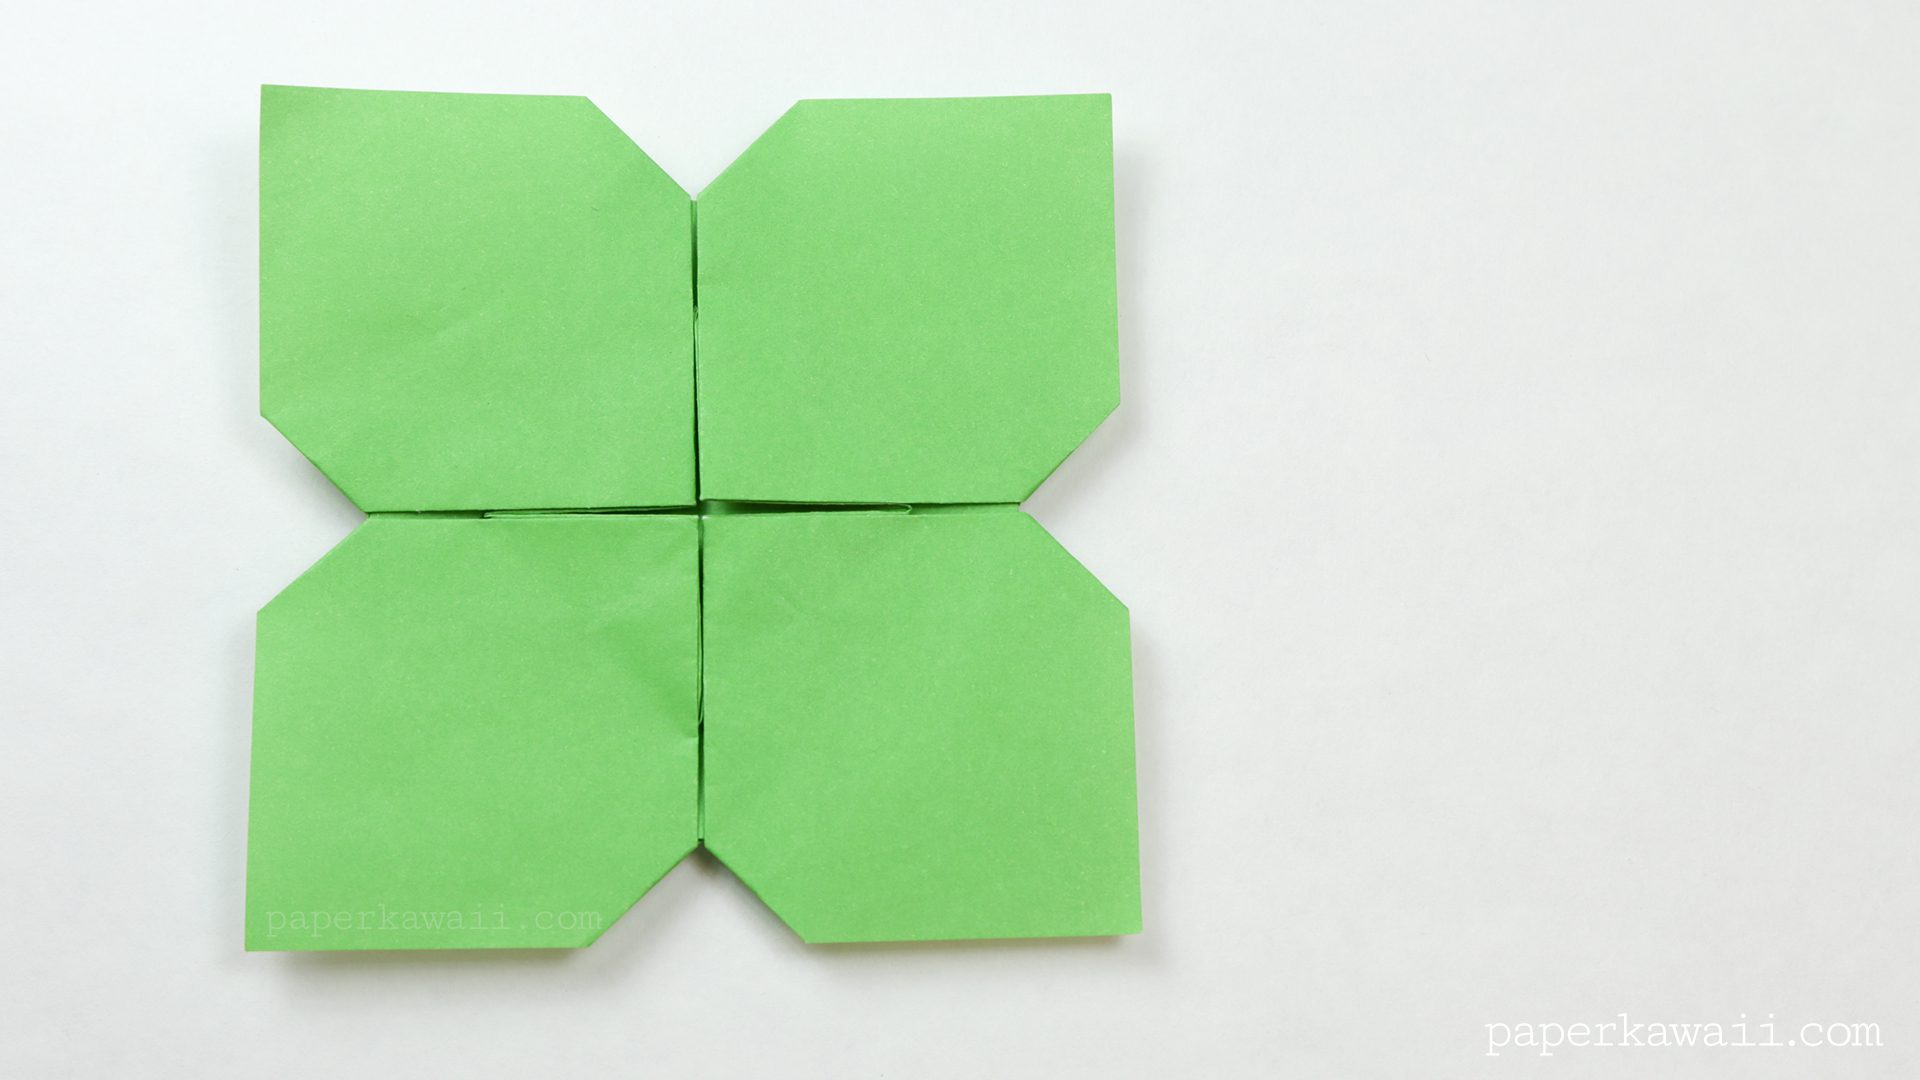 origami clover flower instructions #origami #diy #crafts #clover #flower